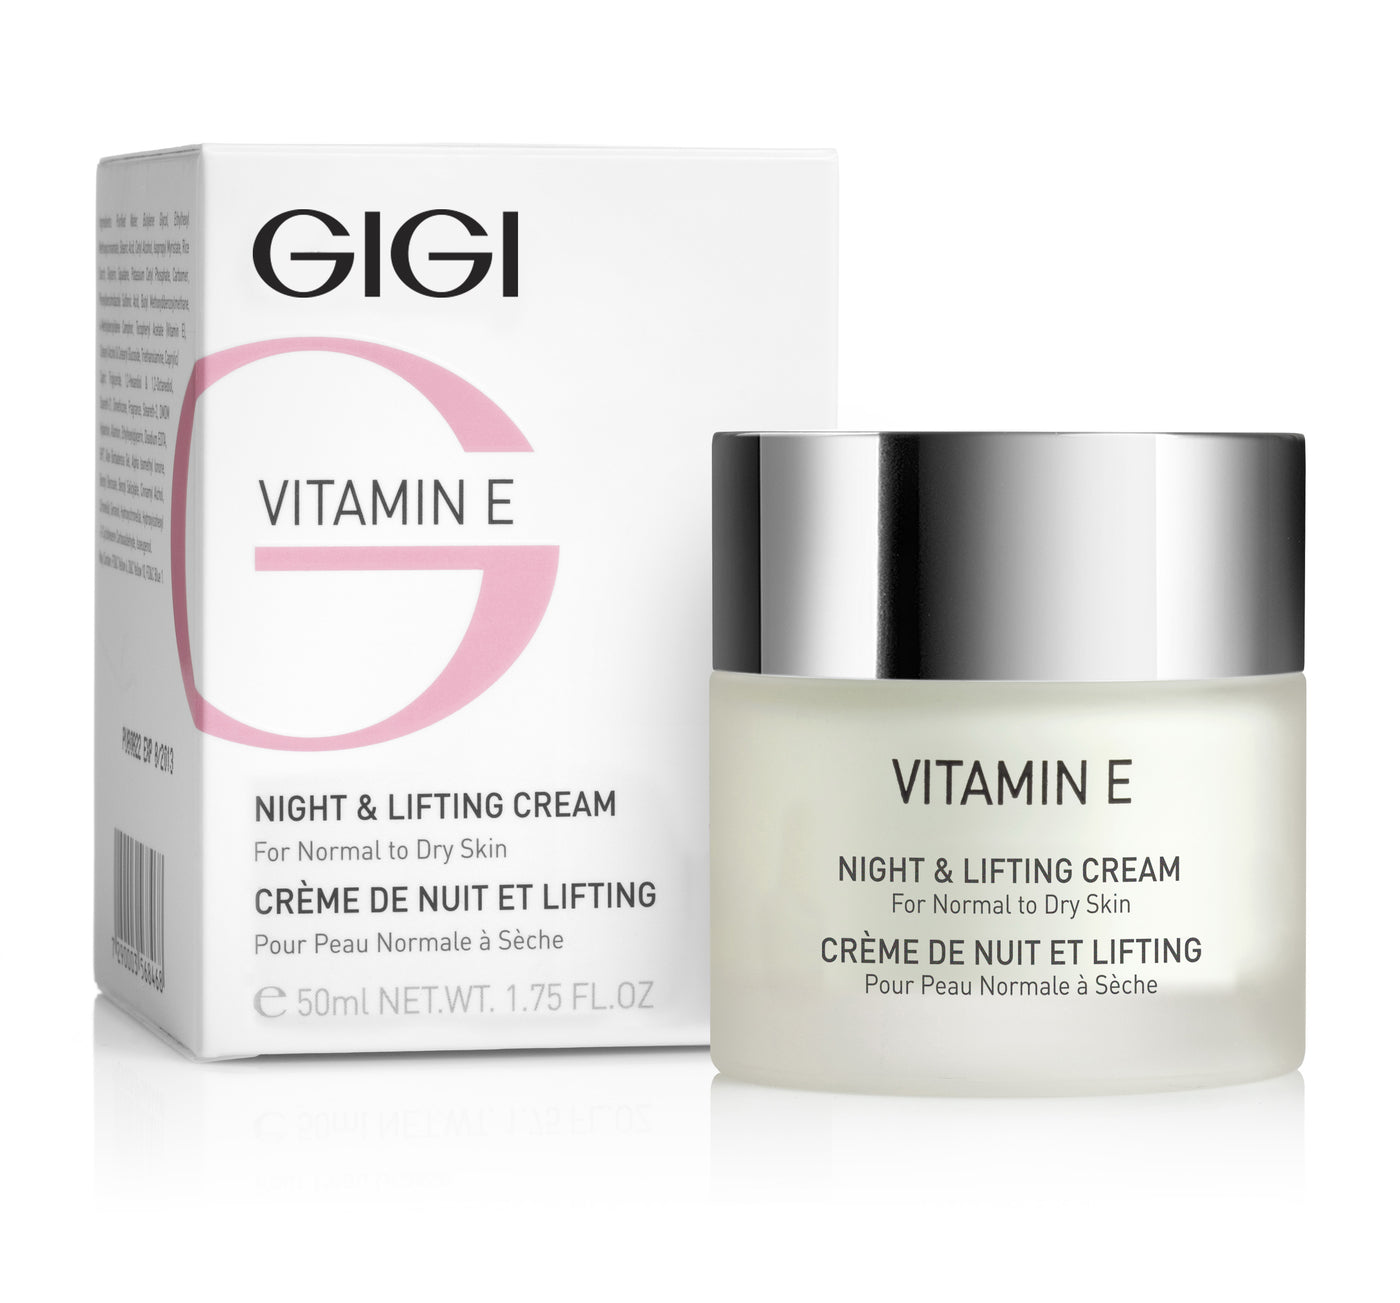 GIGI Vitamin E Night & Lifting Cream